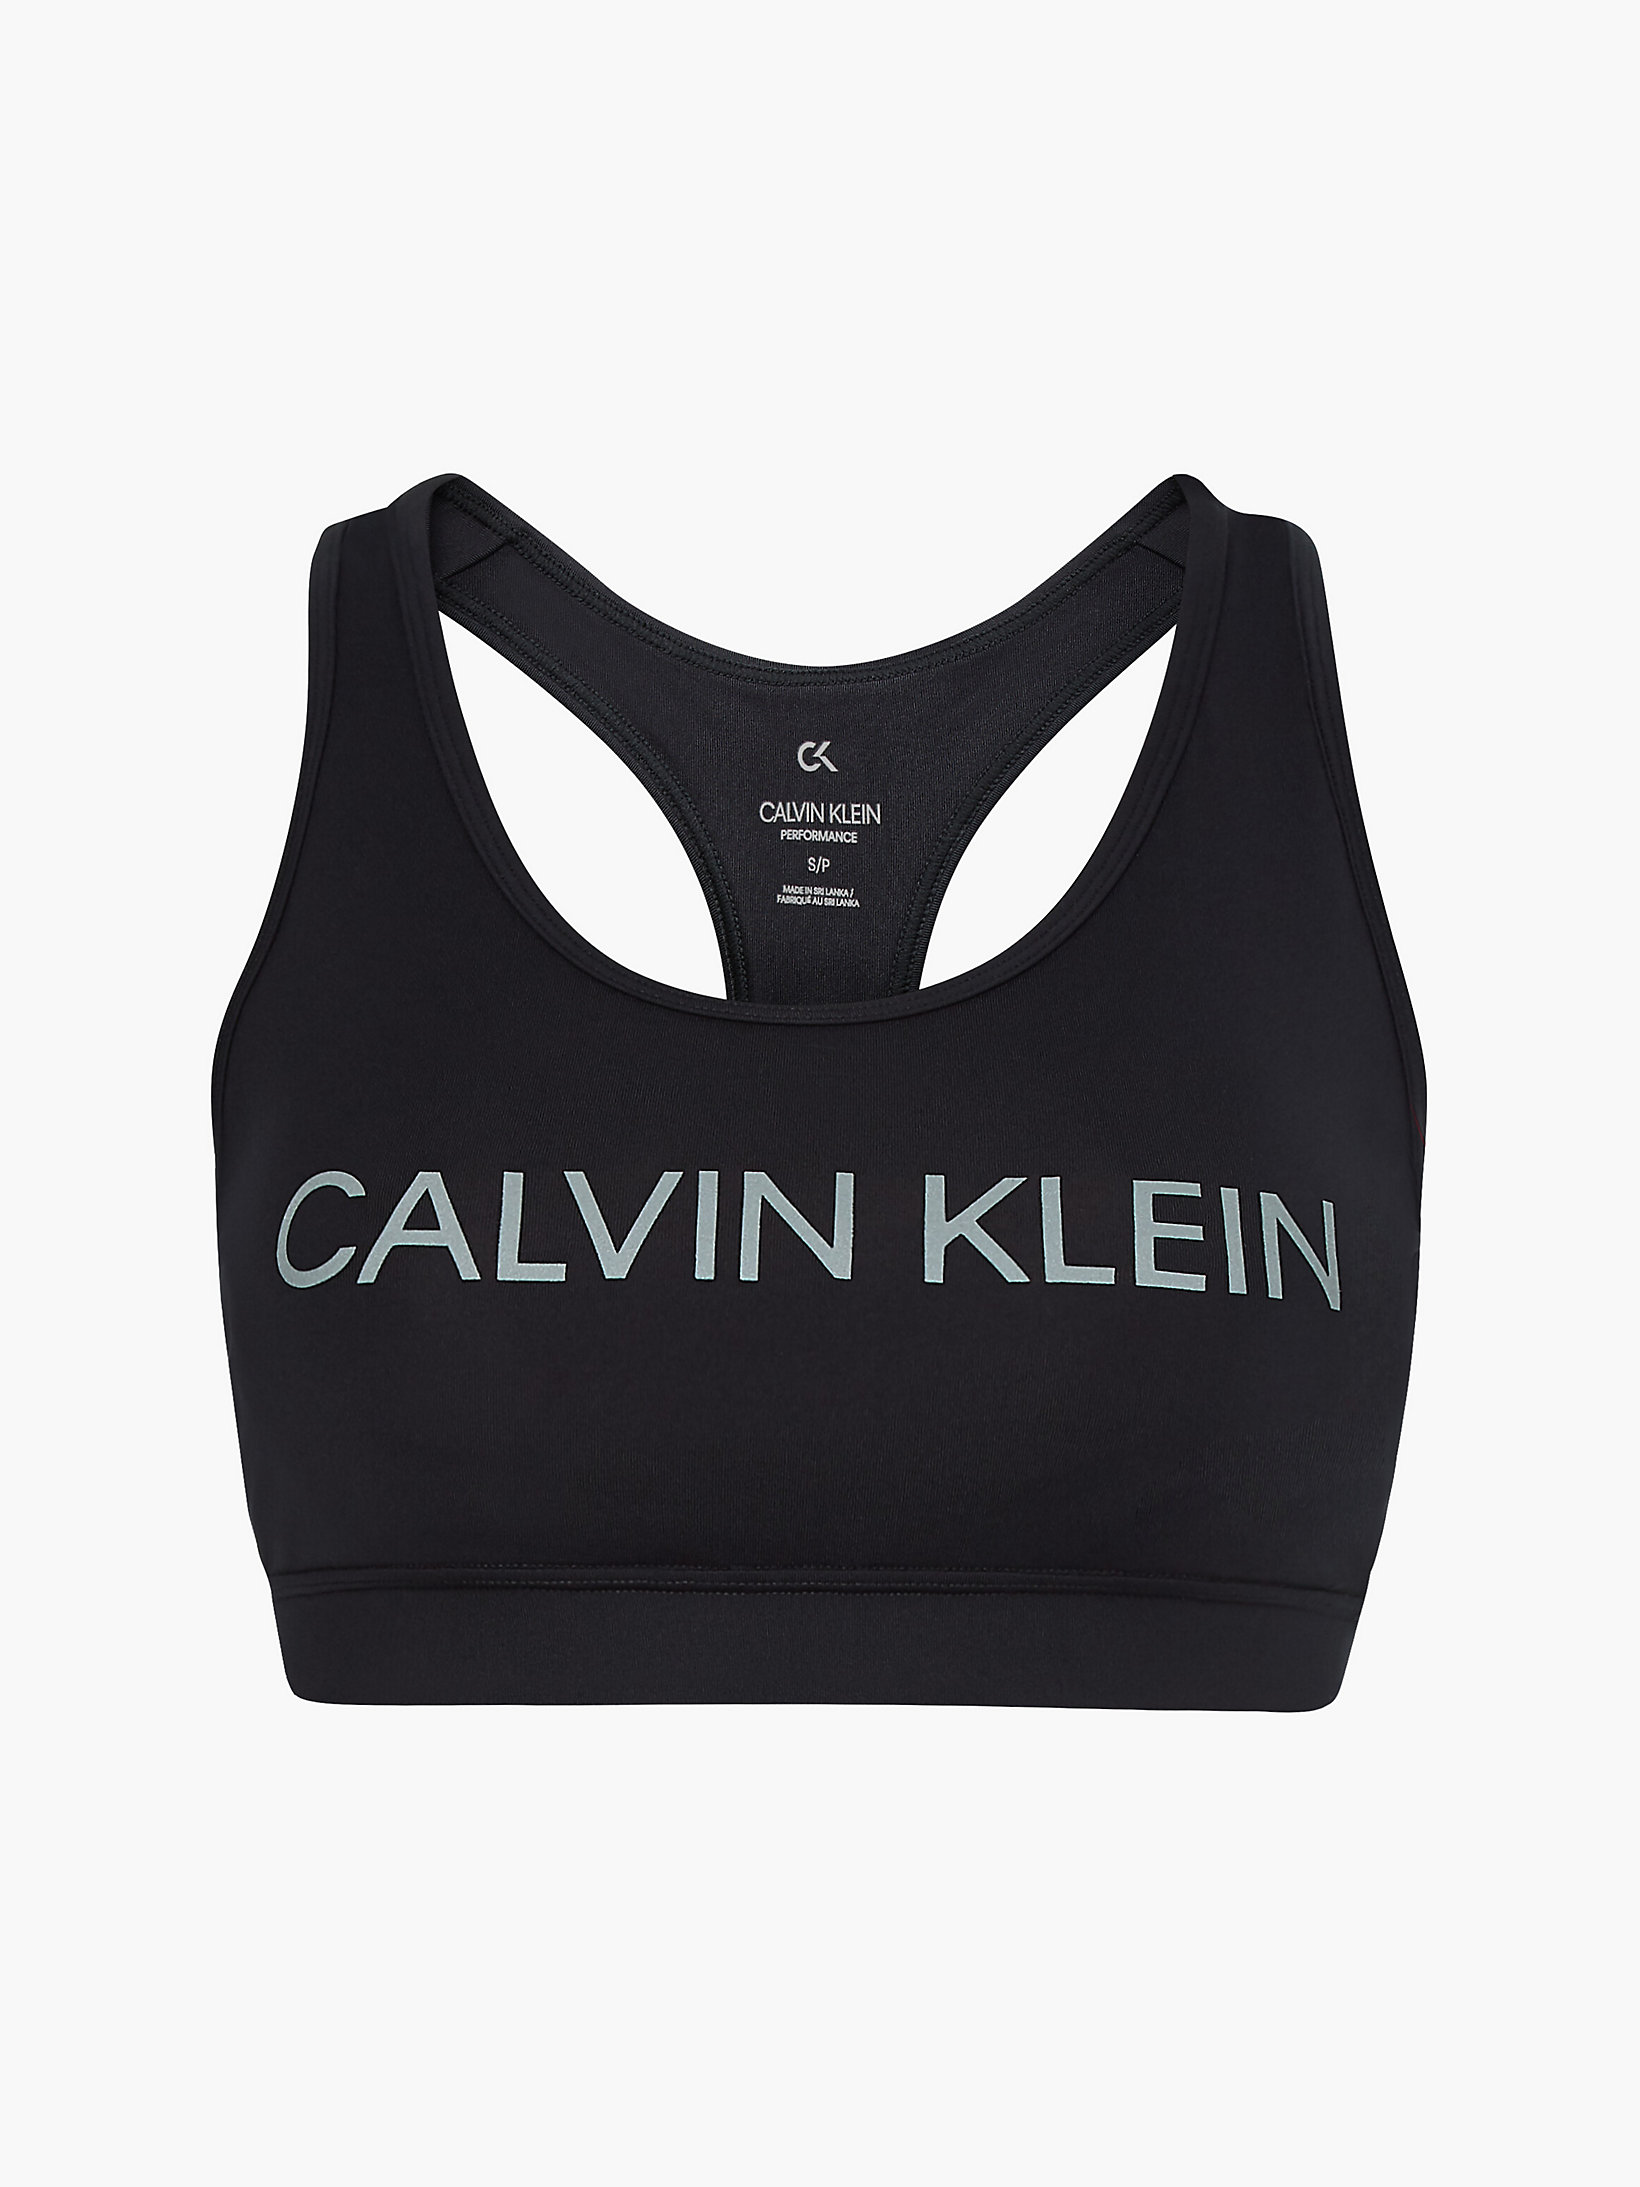 CK Black/reflective Silver > Бюстгальтер для среднеинтенсивных тренировок > undefined Женщины - Calvin Klein